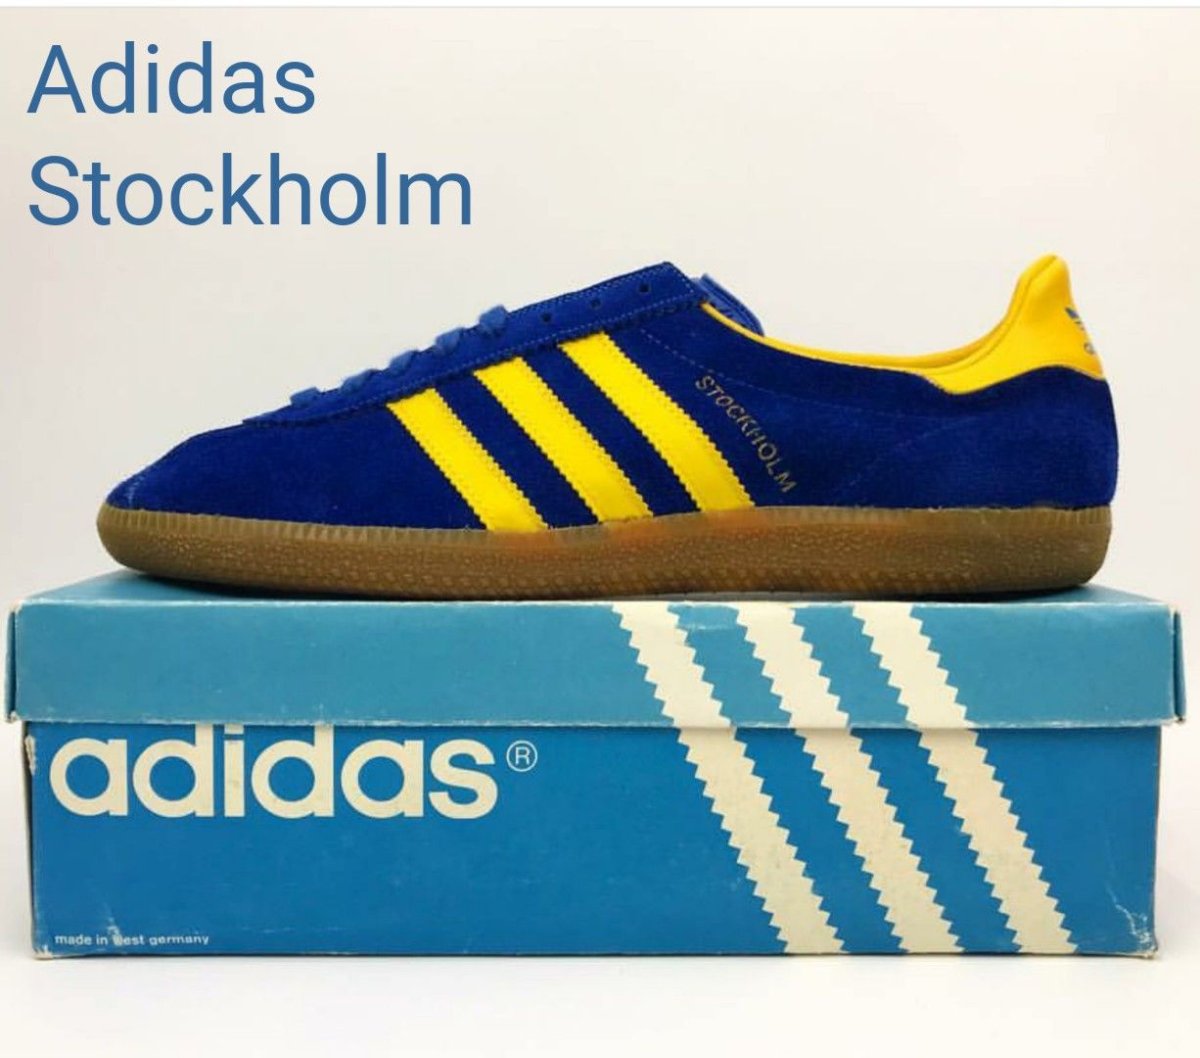 Adidas Stockholm 2014